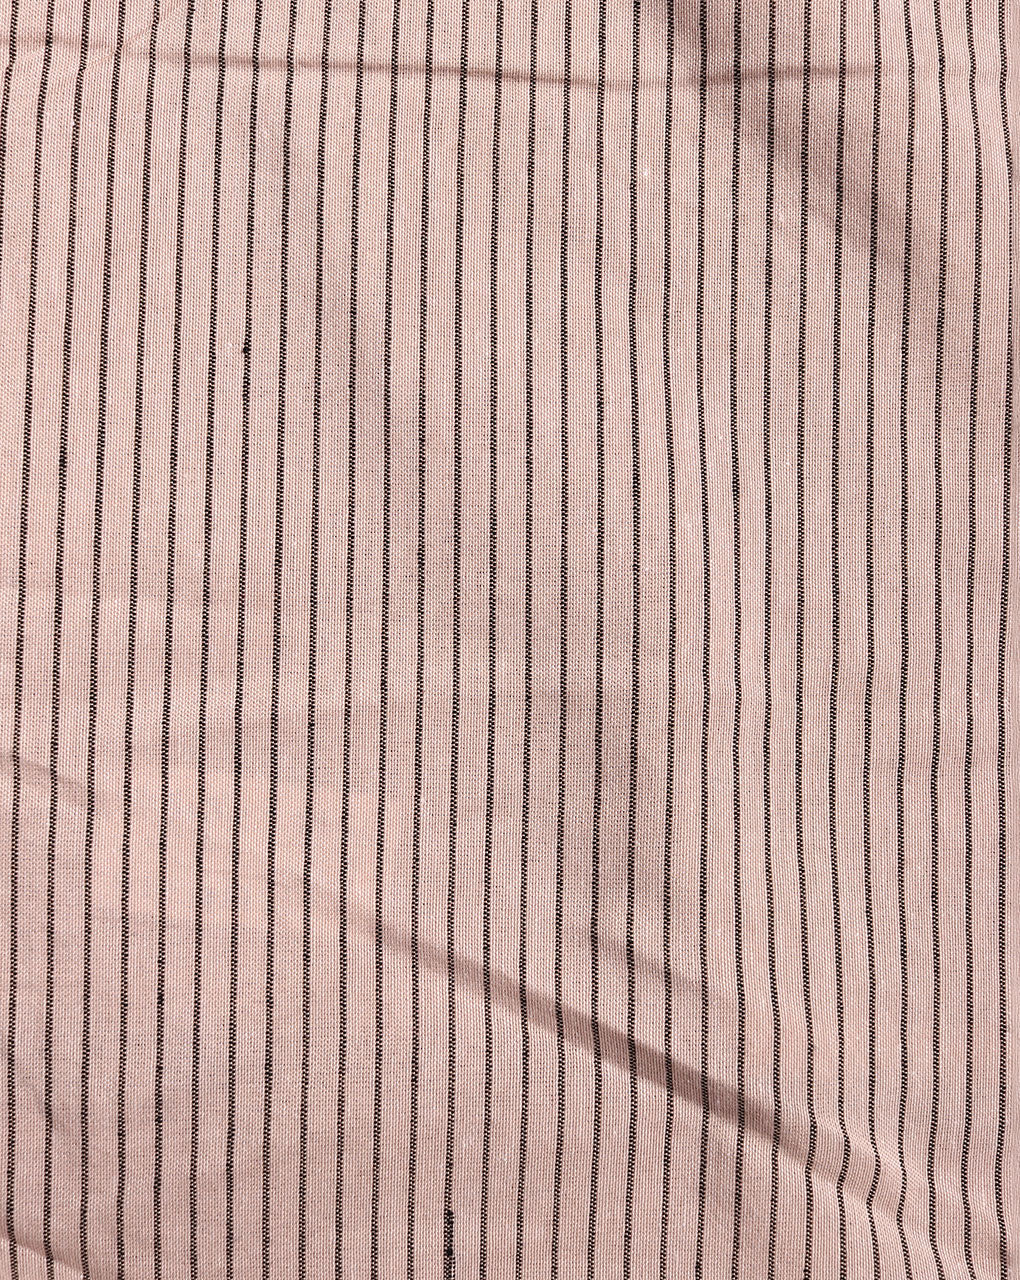 Off-White Stripes Cotton Fabric